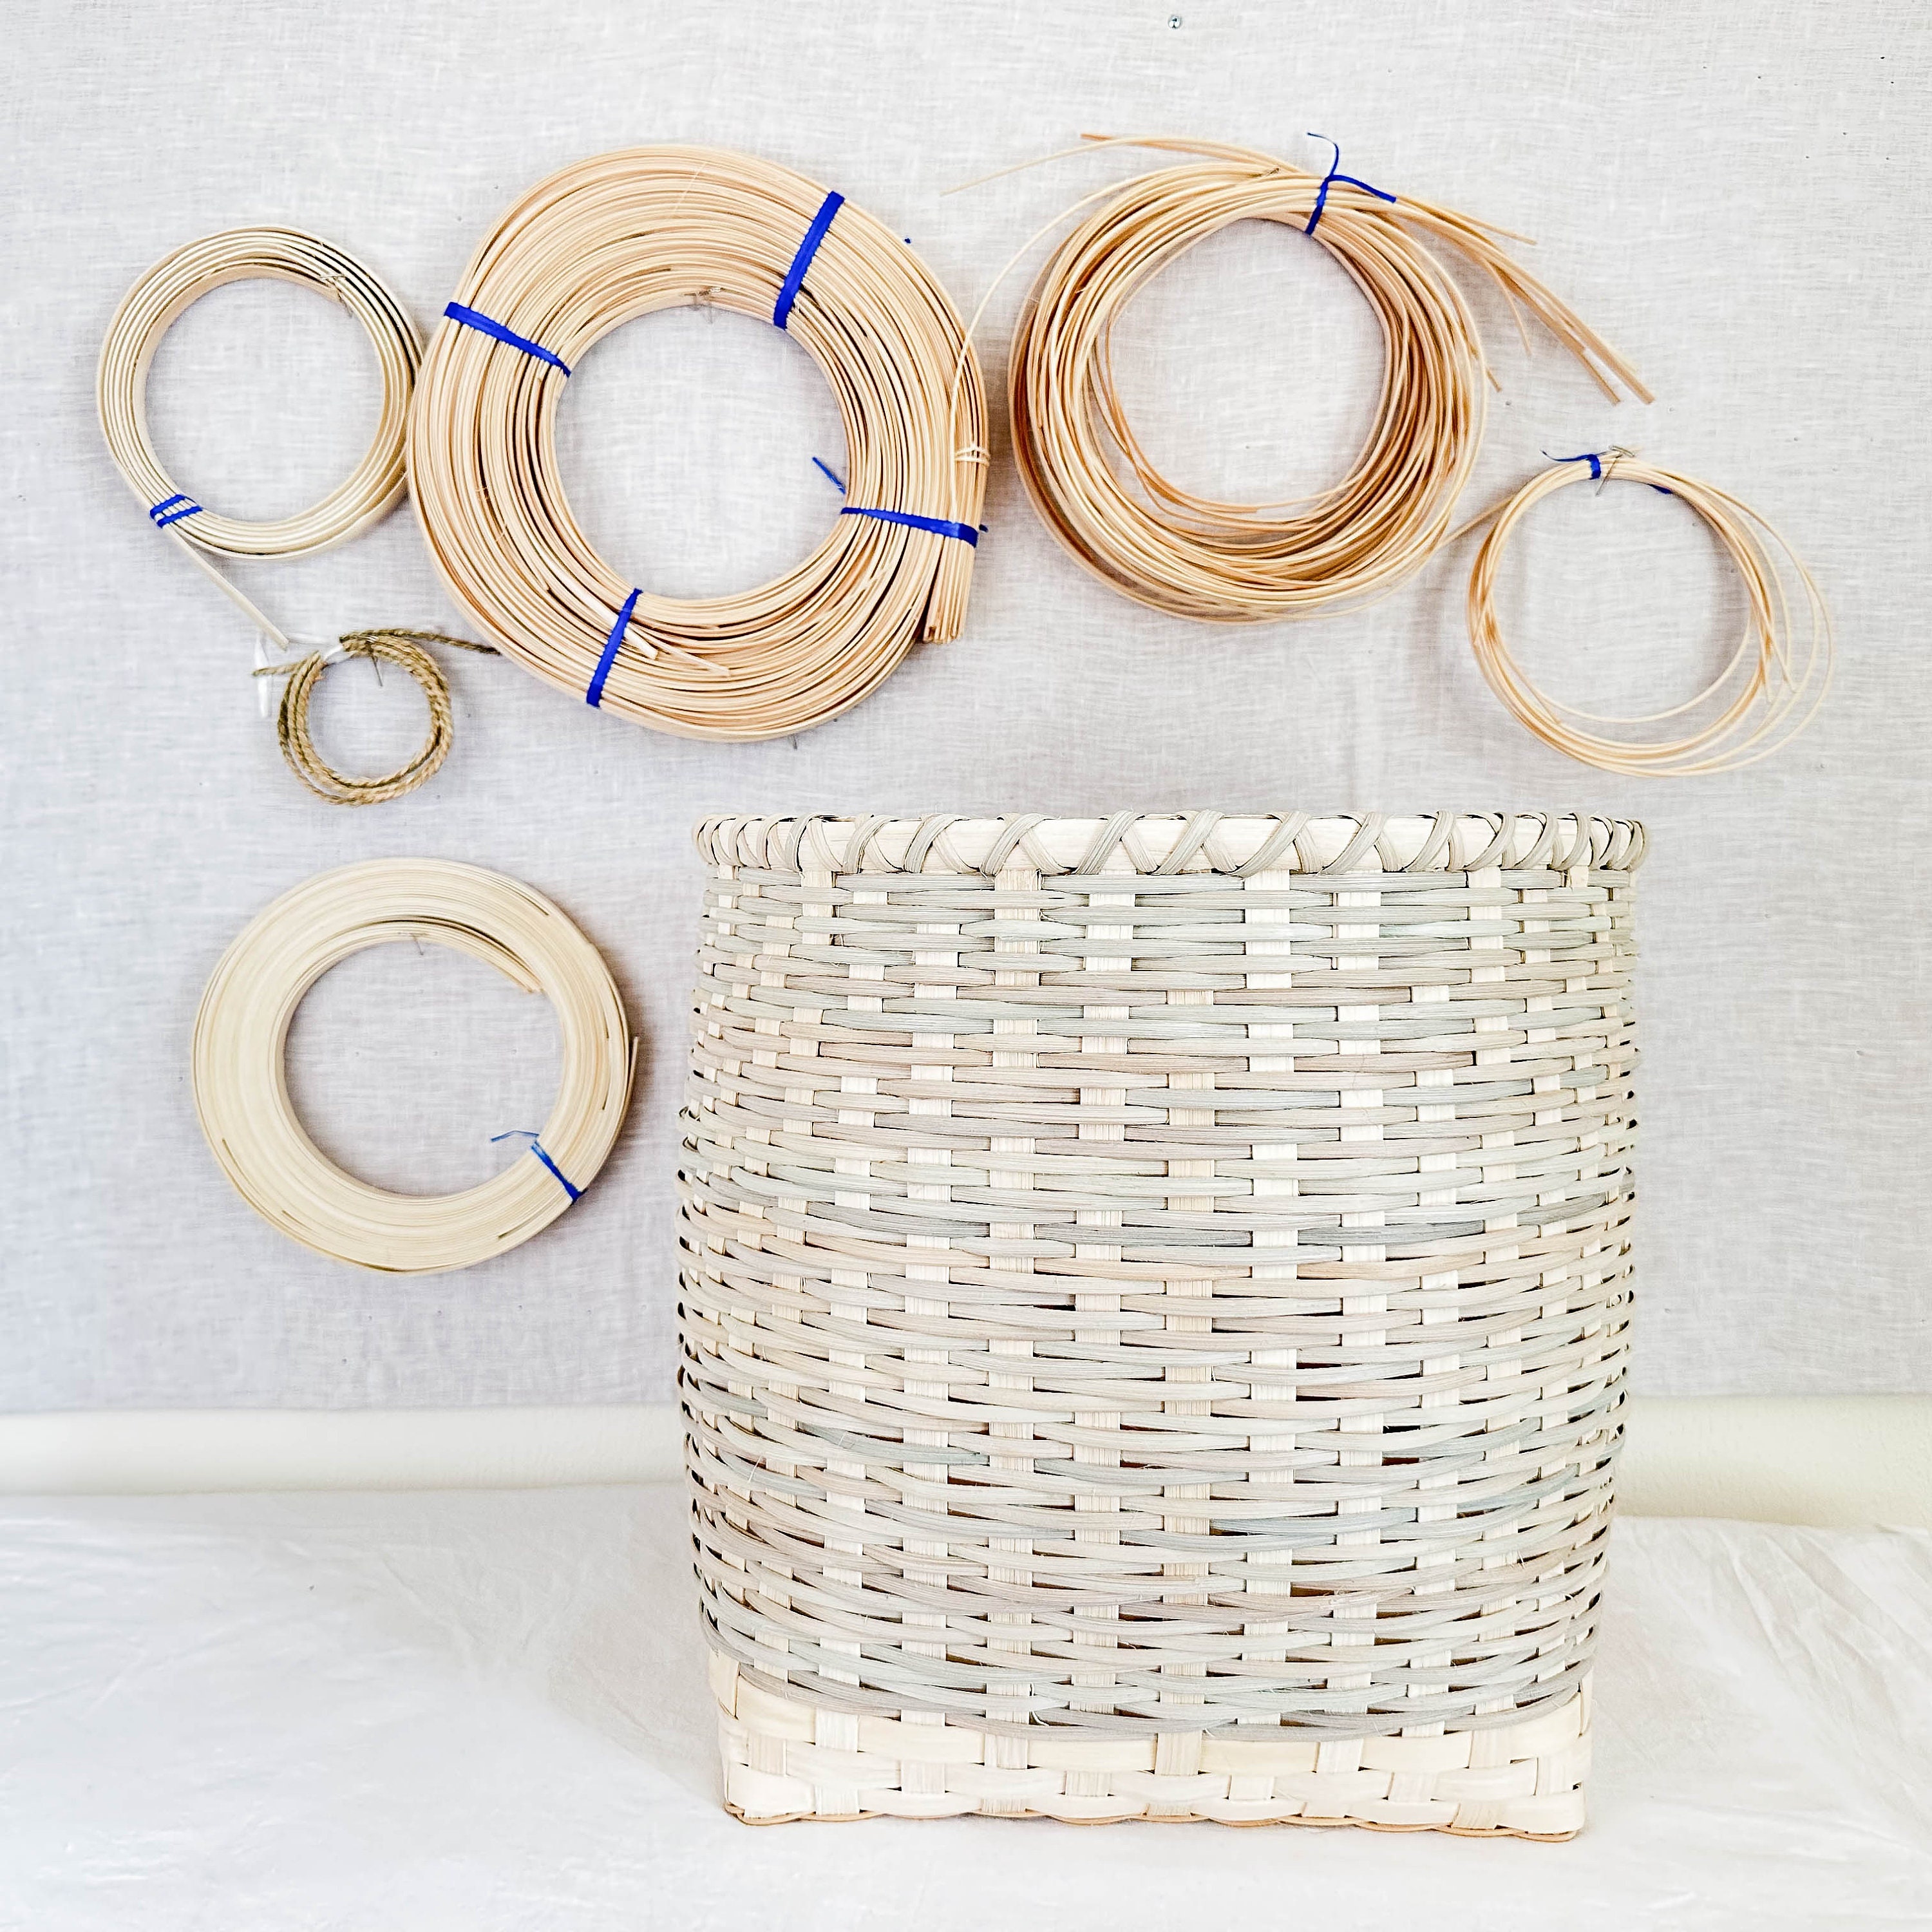 Basket Weaving Kit With Basic Instructions Basket Weaving Supplies